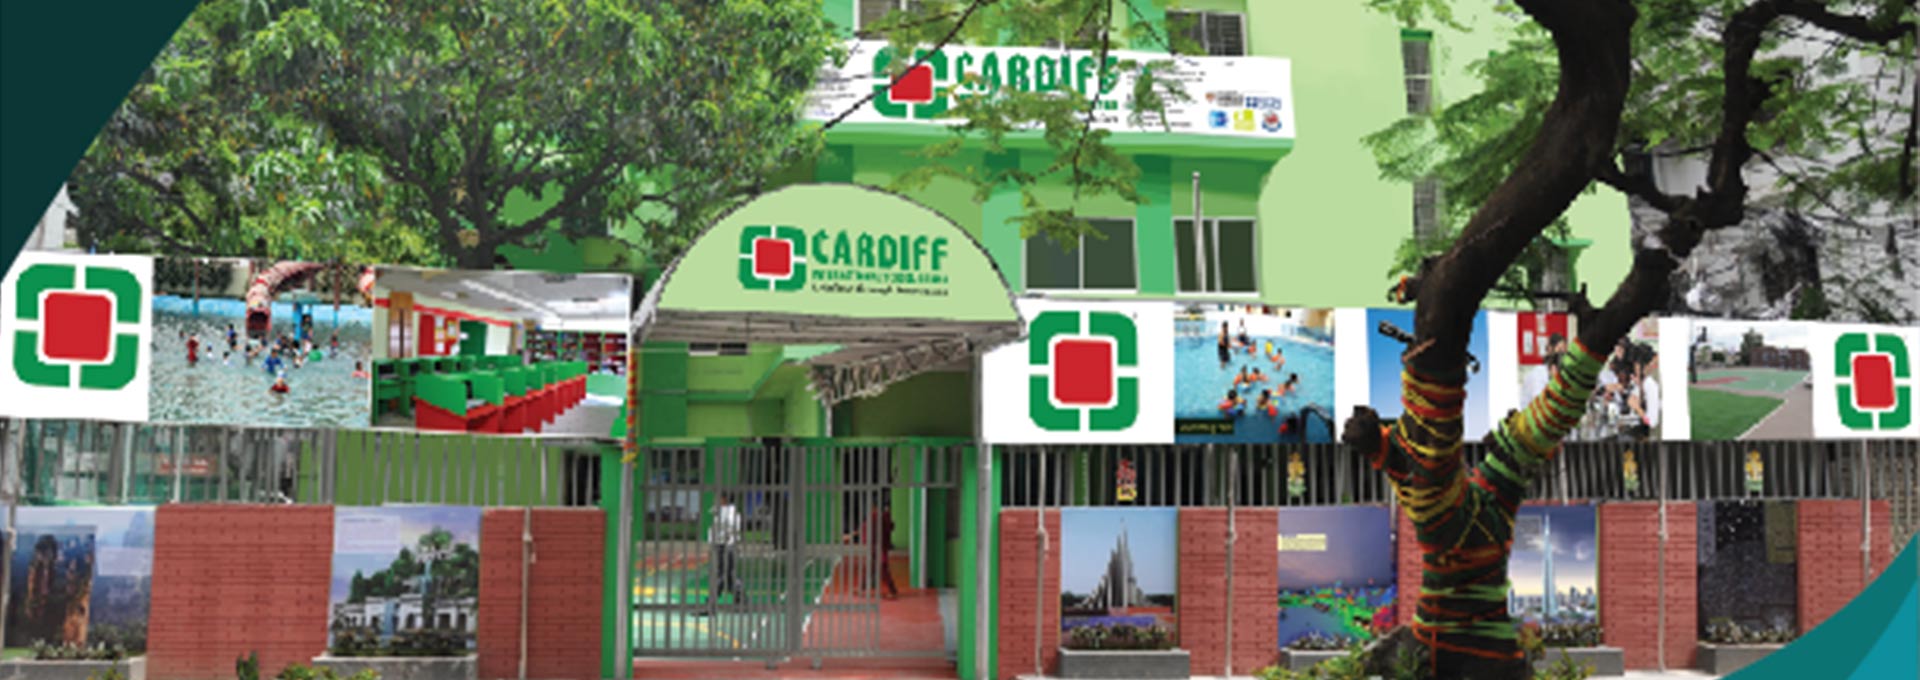 Cardiff International School, Dhaka